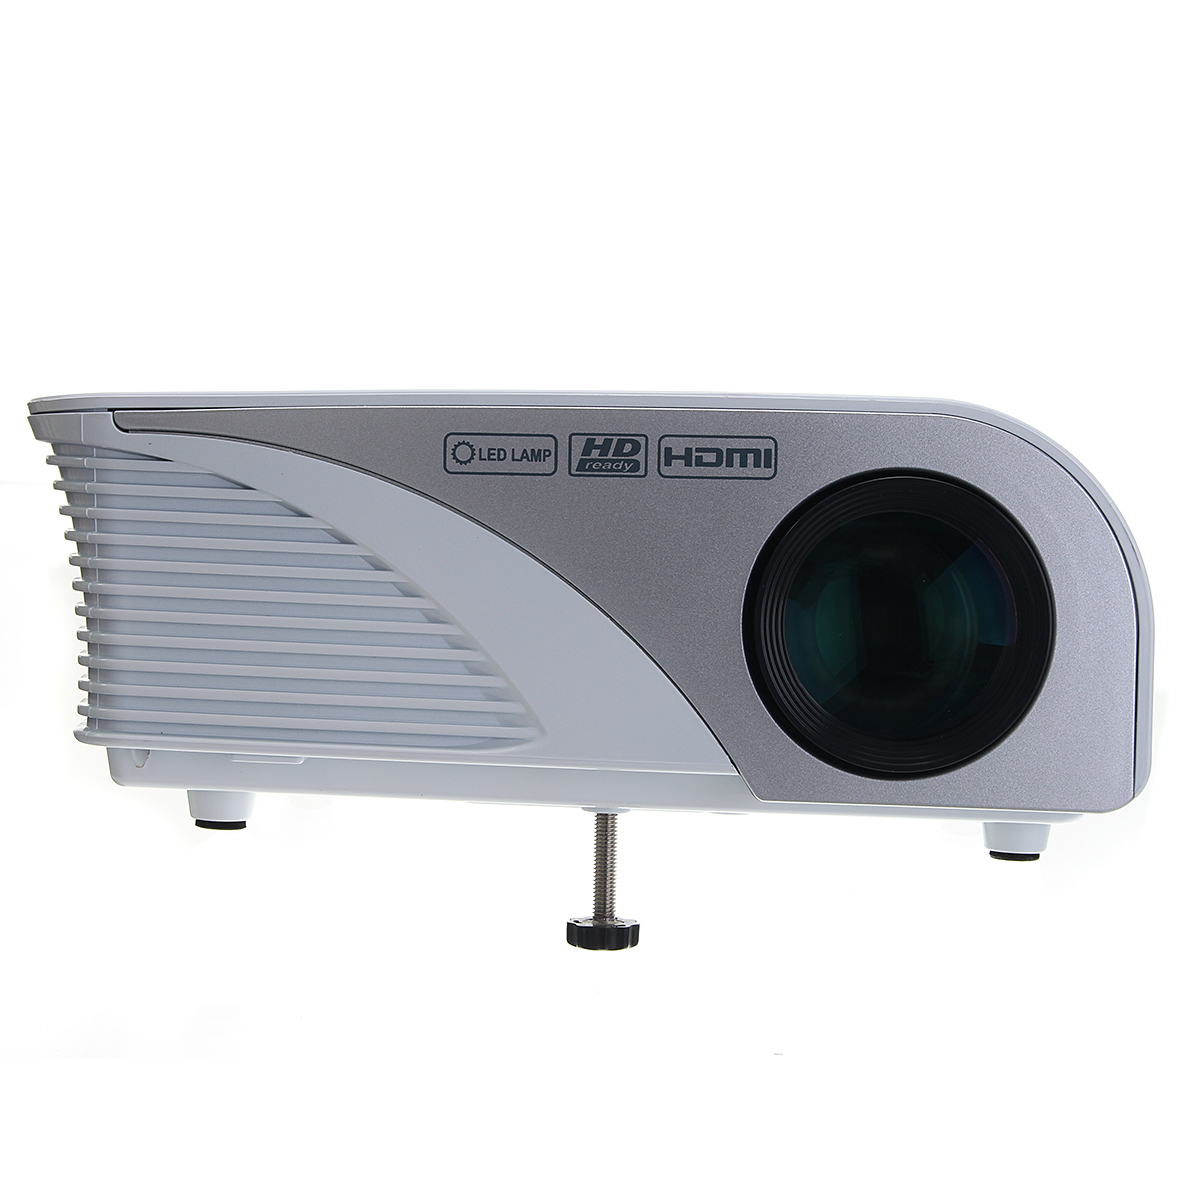 

GIGXON G-8005B 1200 Lumens 800x480 Resolution Portable LCD LED Домашний кинотеатр Проектор